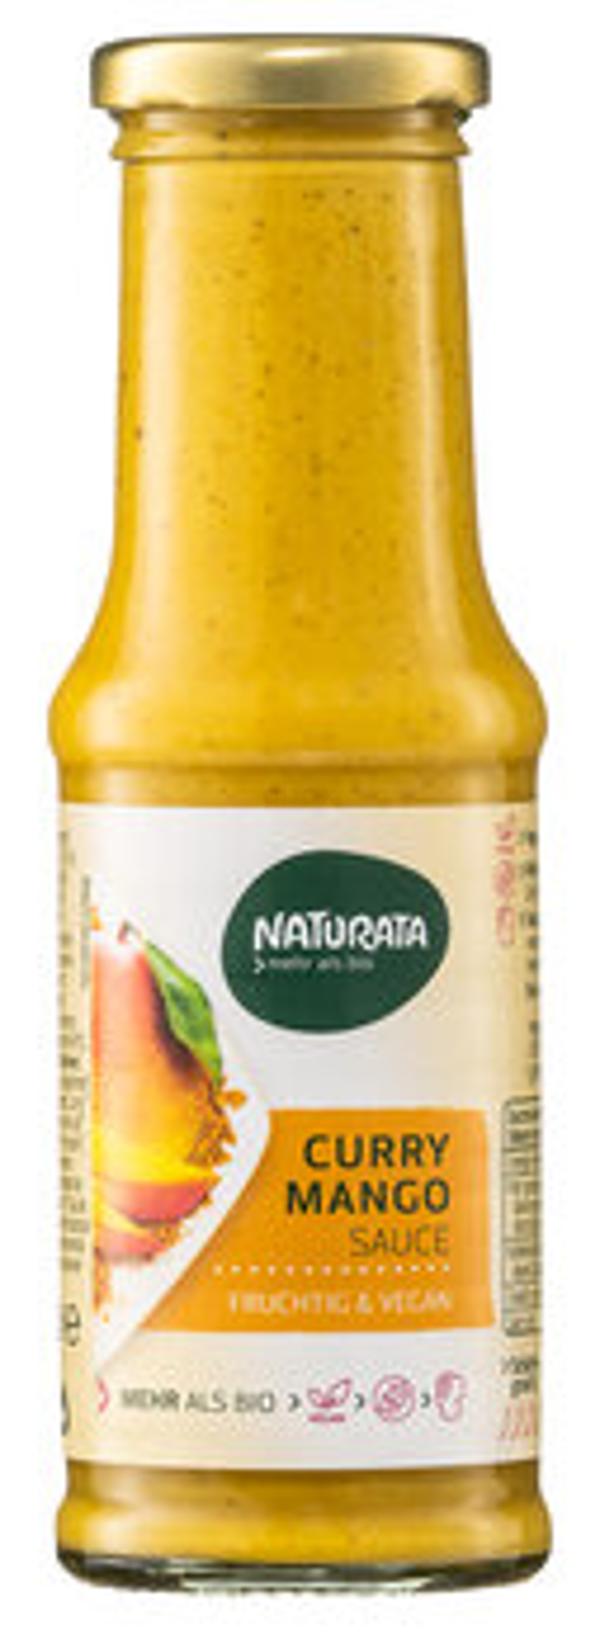 Produktfoto zu Curry Mango Sauce, 210 ml